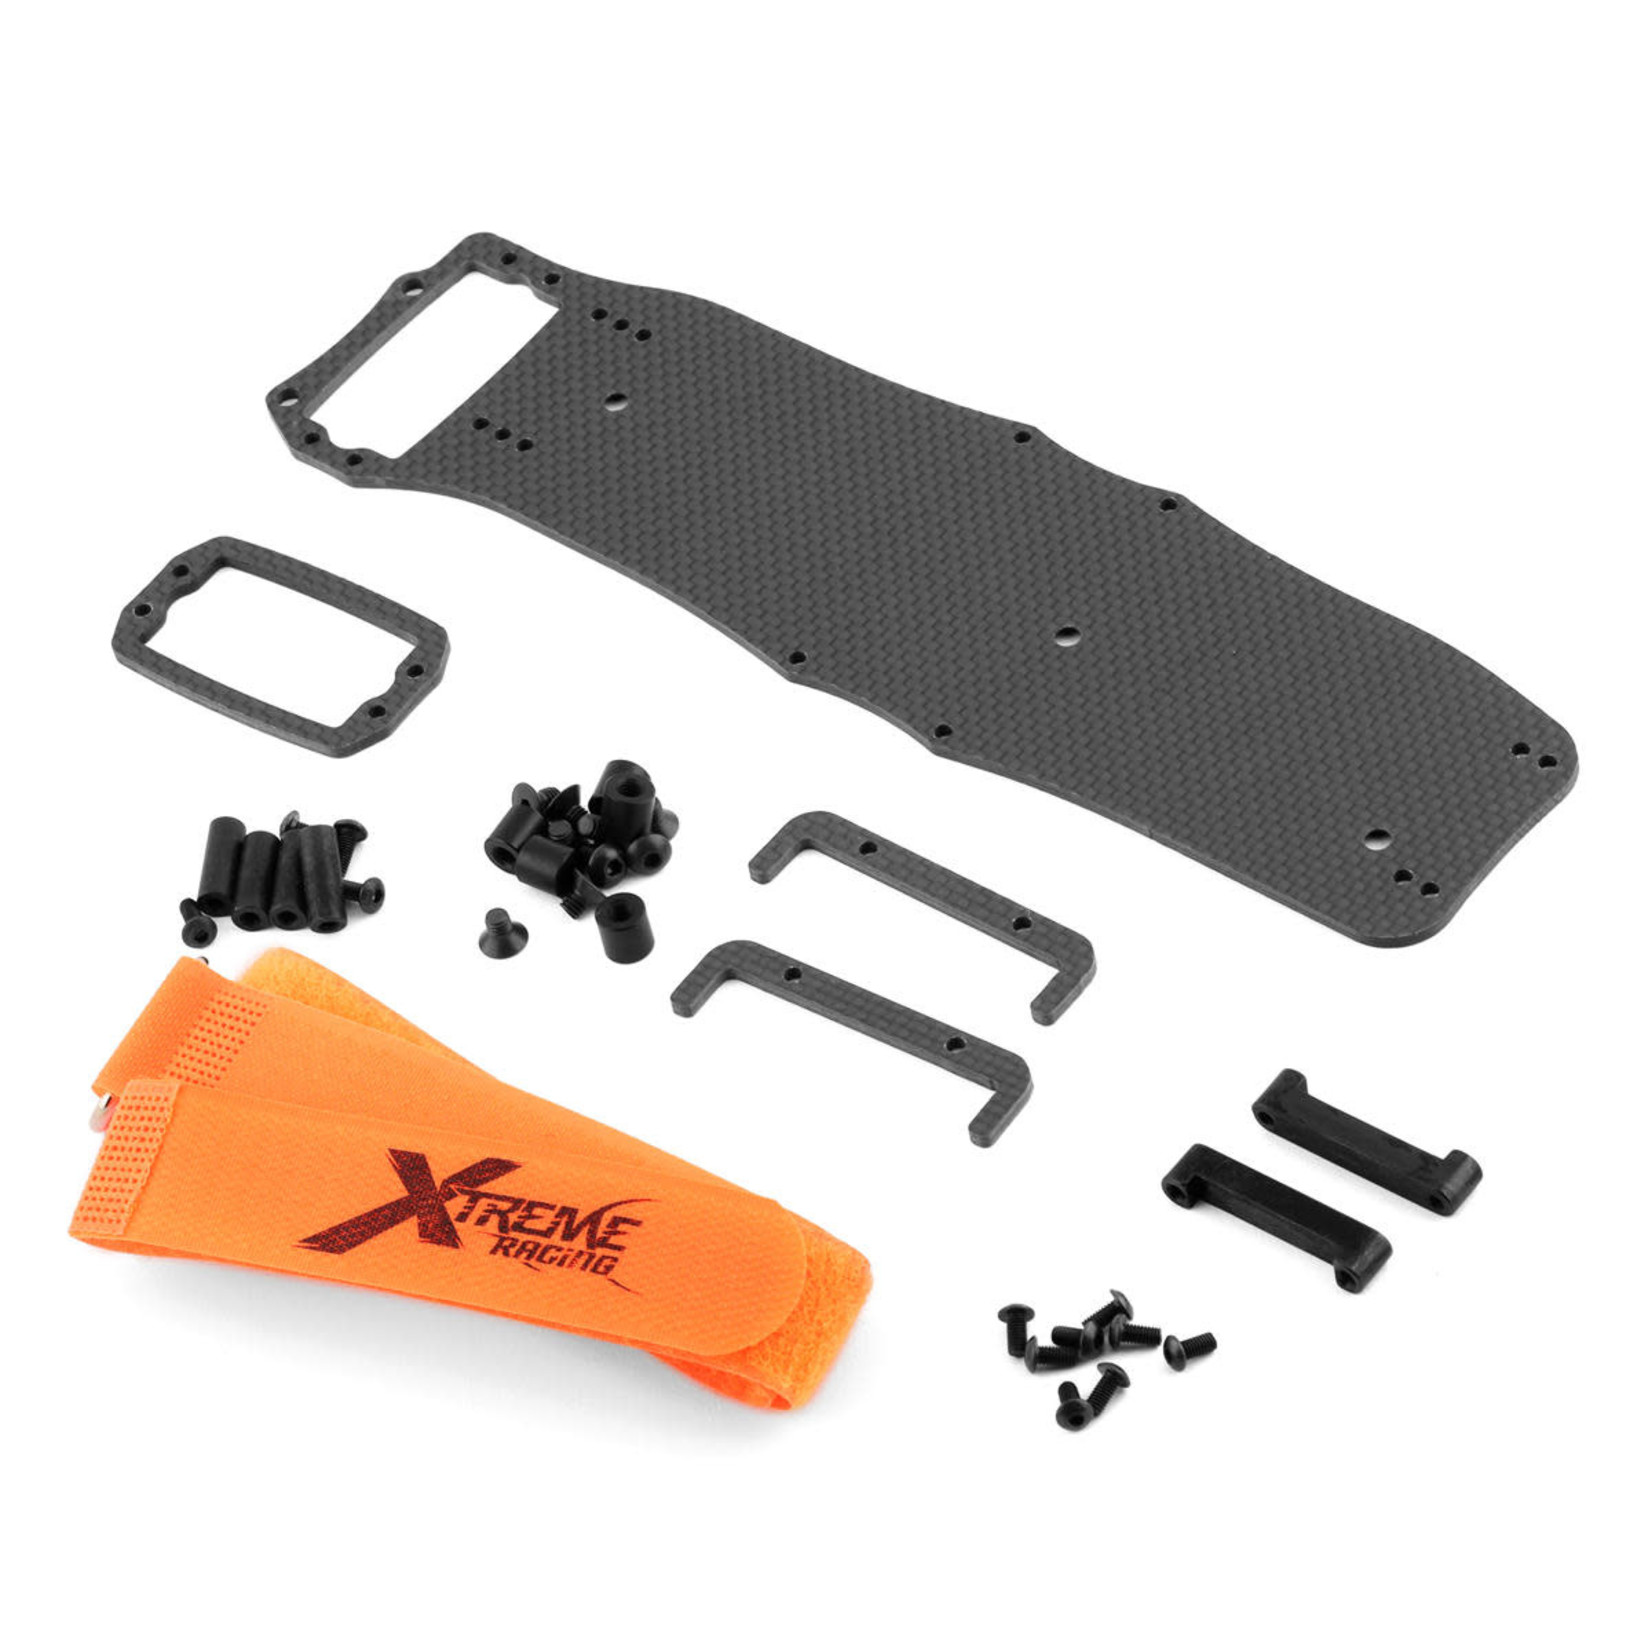 Xtreme Racing Xtreme Racing Traxxas Sledge Carbon Fiber Battery & Servo Mount (2.5mm) #10688